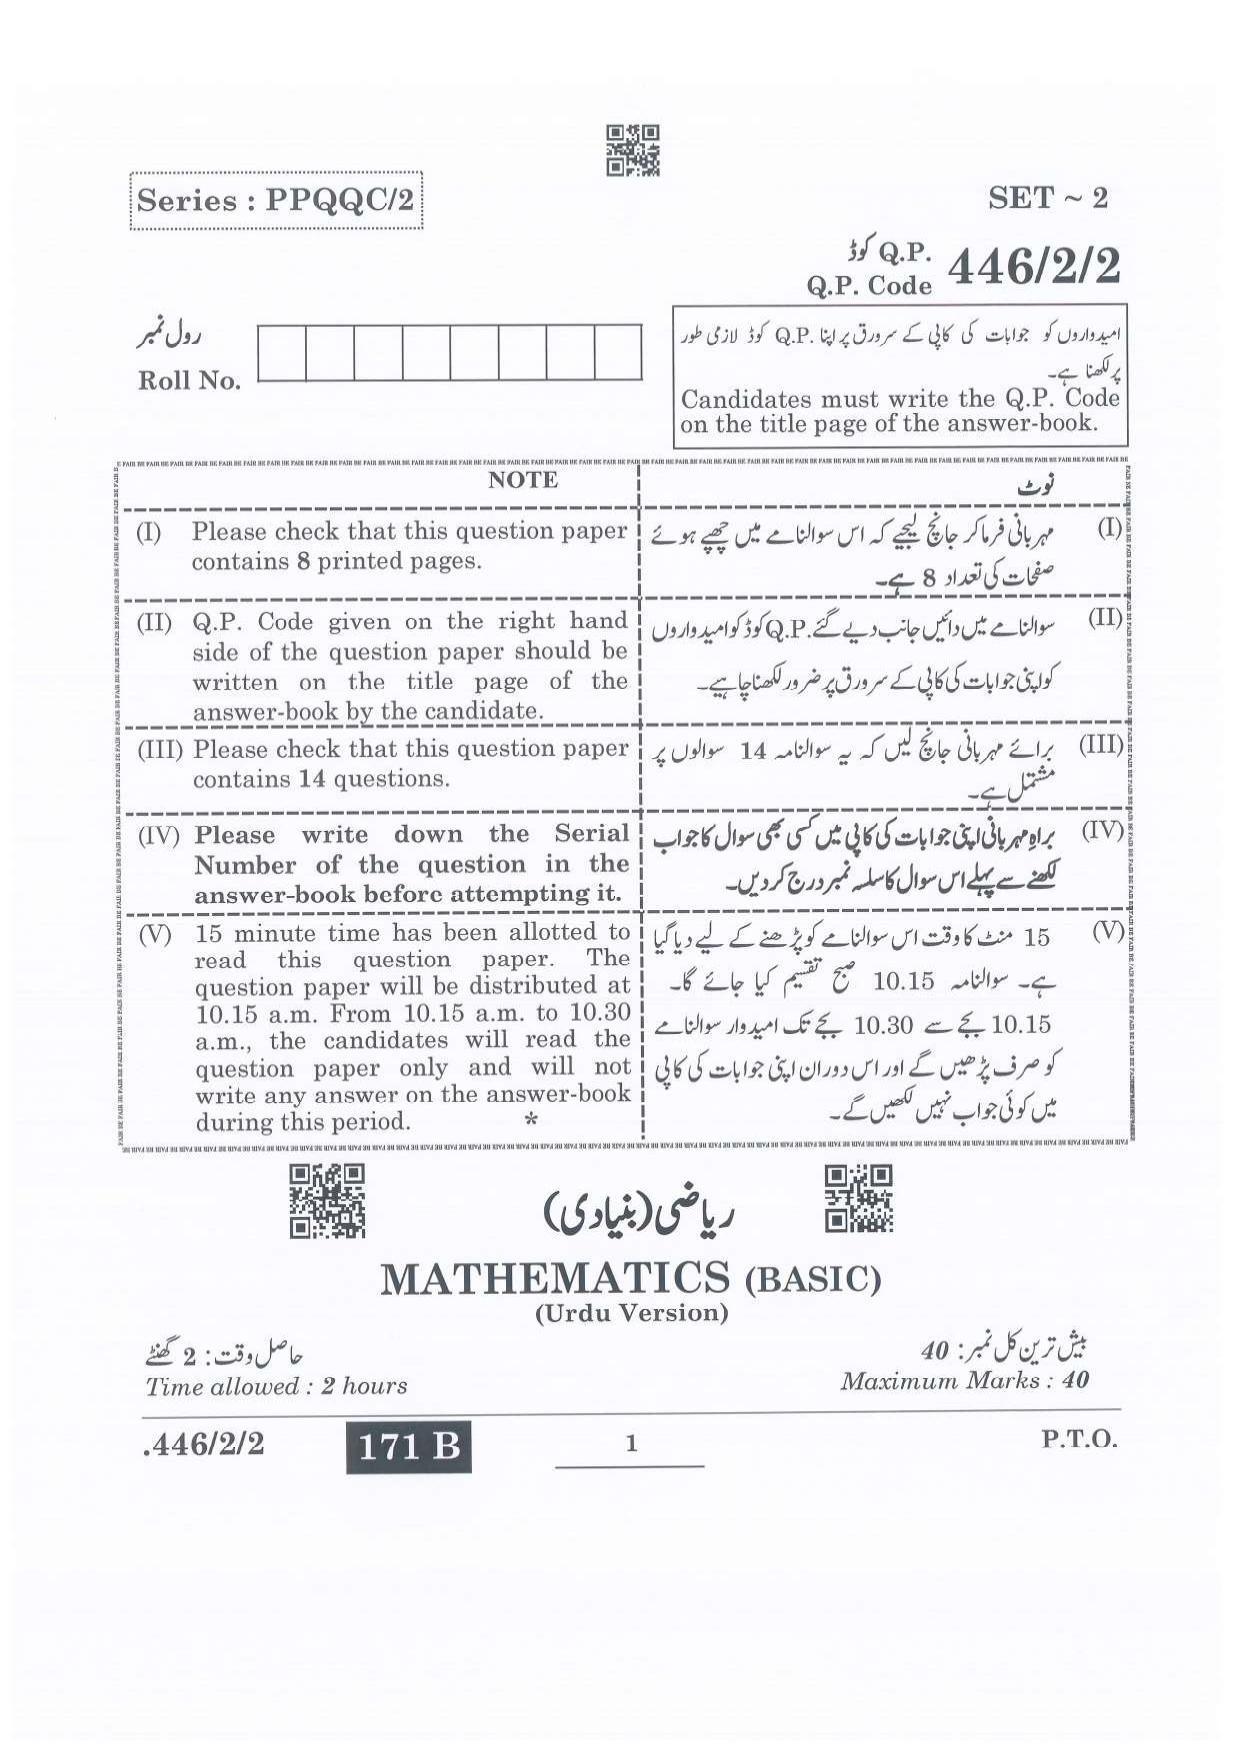 CBSE Class 10 Maths Basic - Urdu (446/2/2 - SET 2) 2022 Question Paper - Page 1